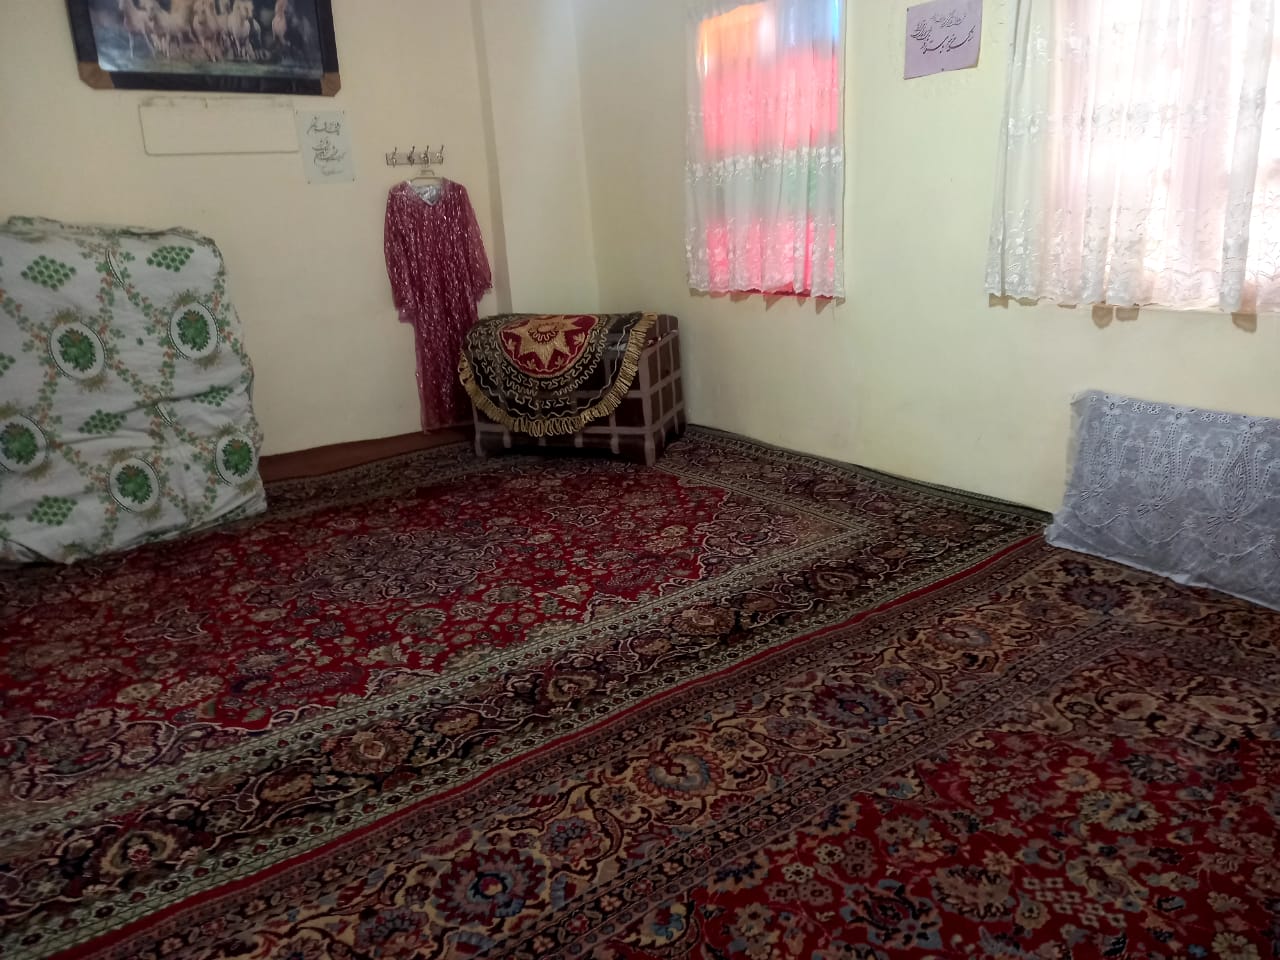 Village اجاره اتاق سنتی در روستا امزادجرد همدان - اتاق 2